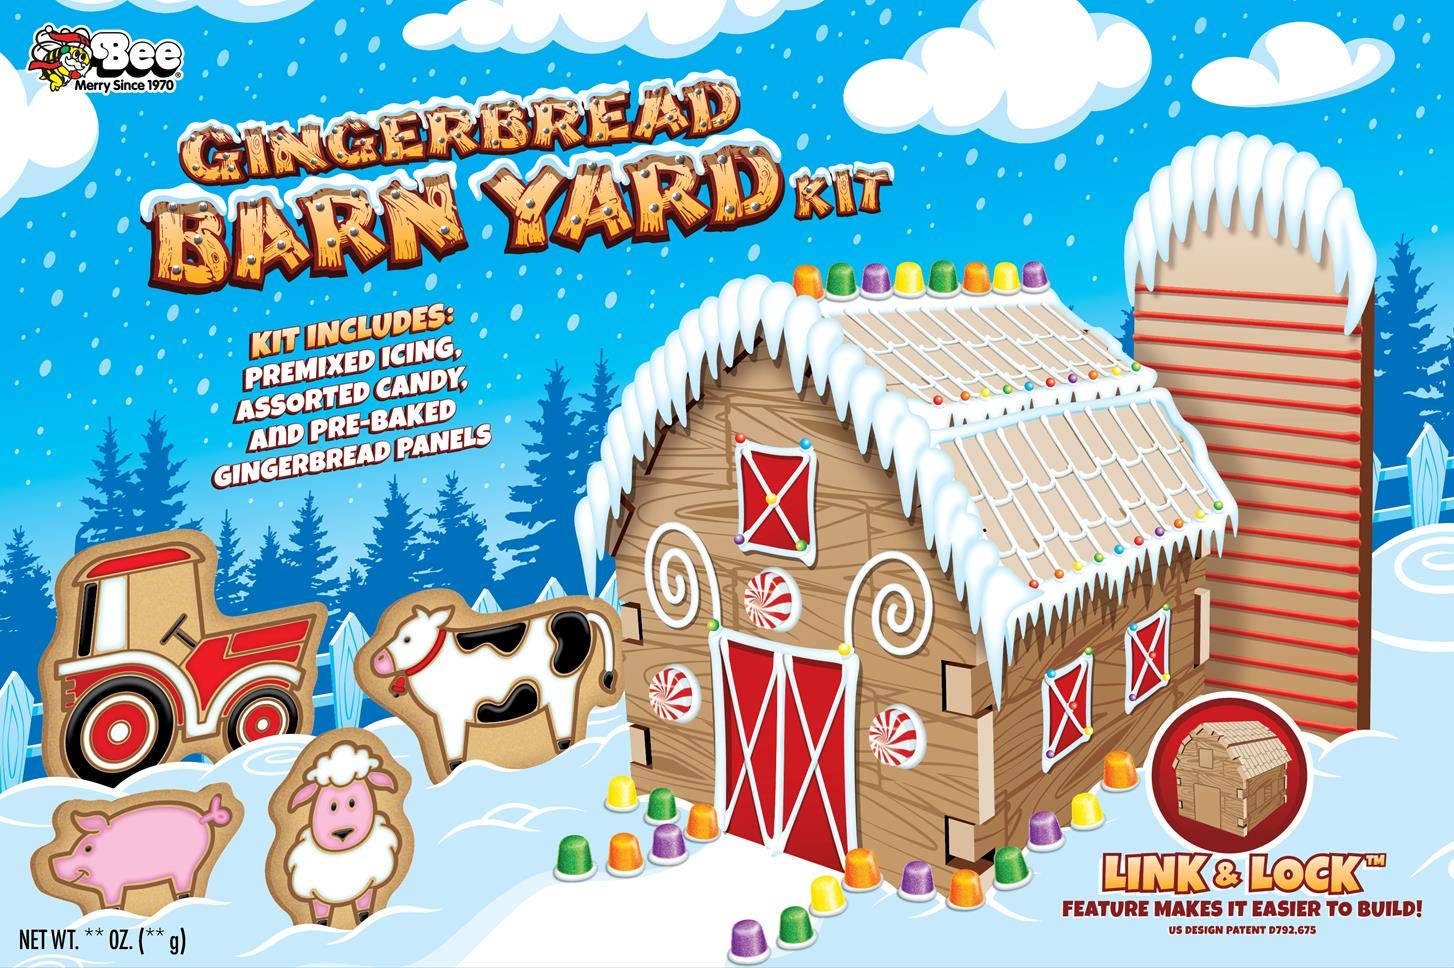 Bee Gingerbread Barn Yard Kit, 32 Ounce - image 1 of 1